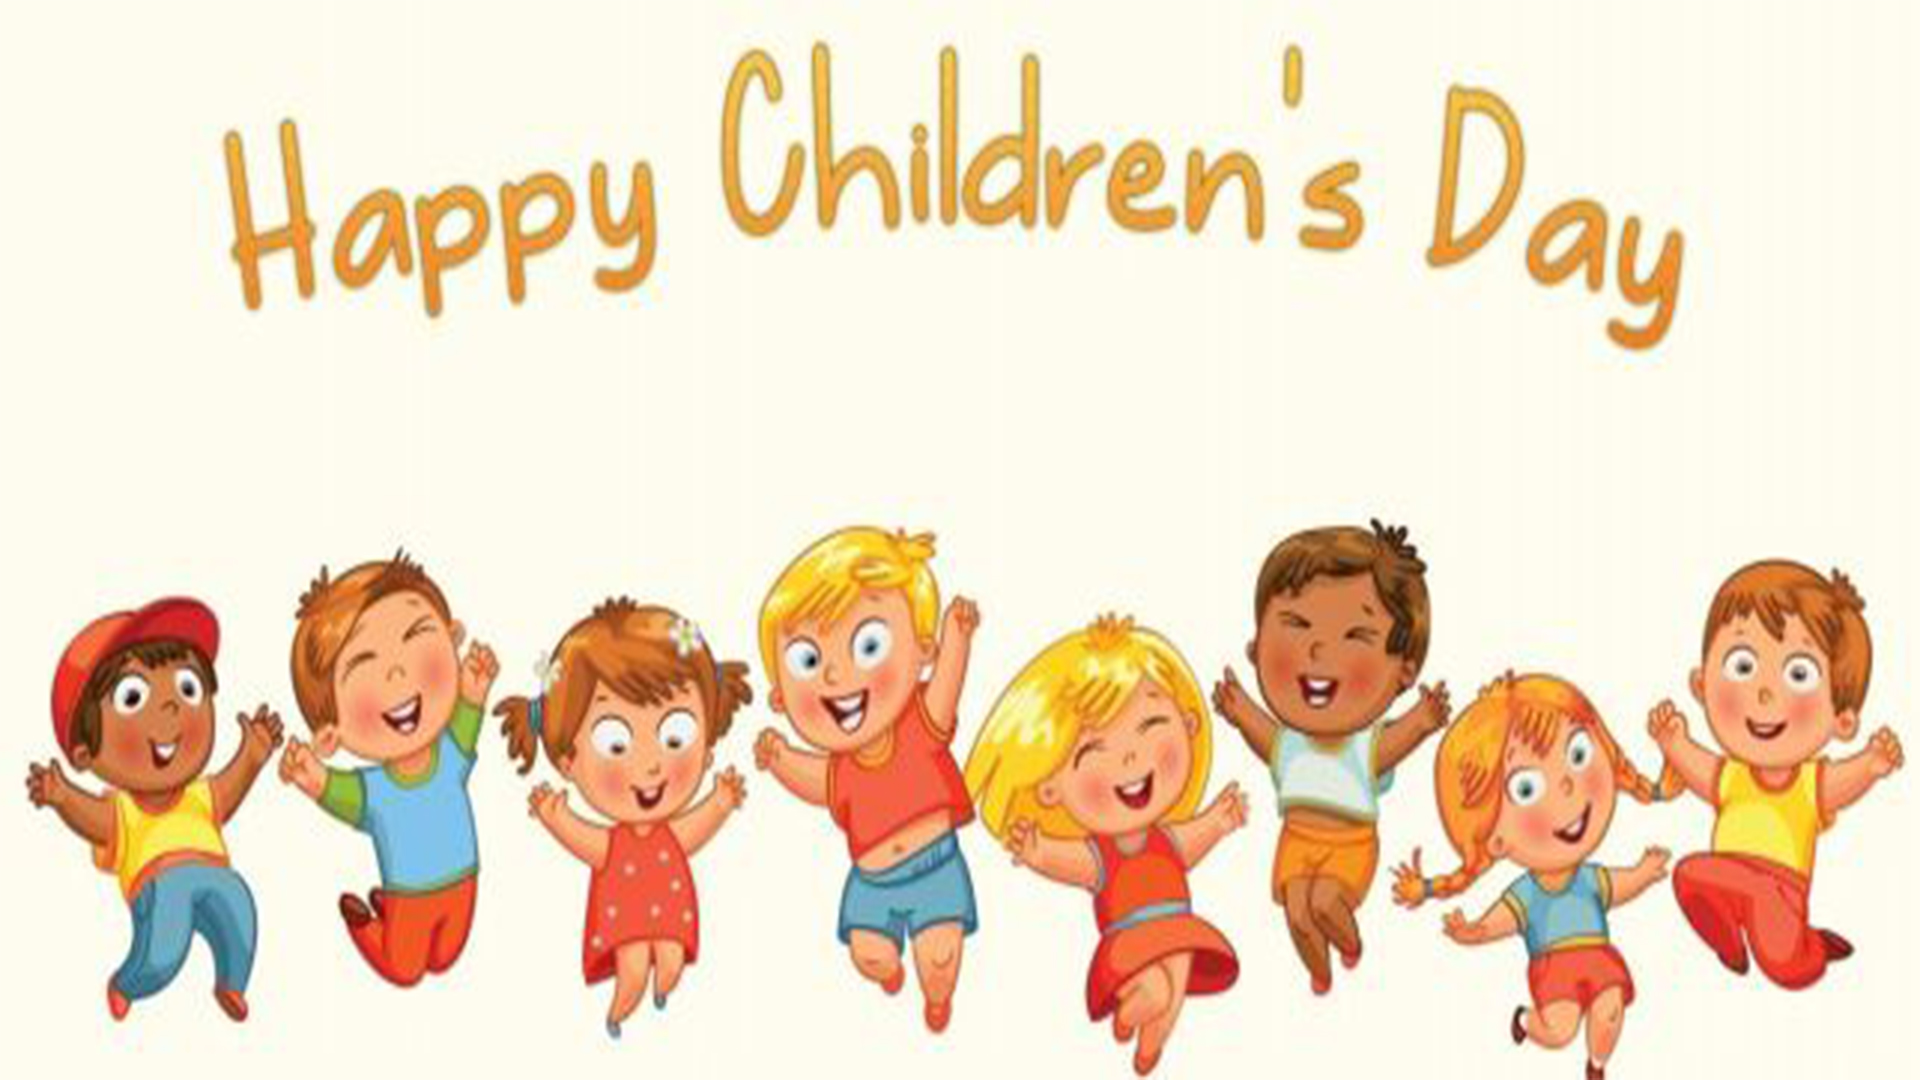 happy children's day 2017 image